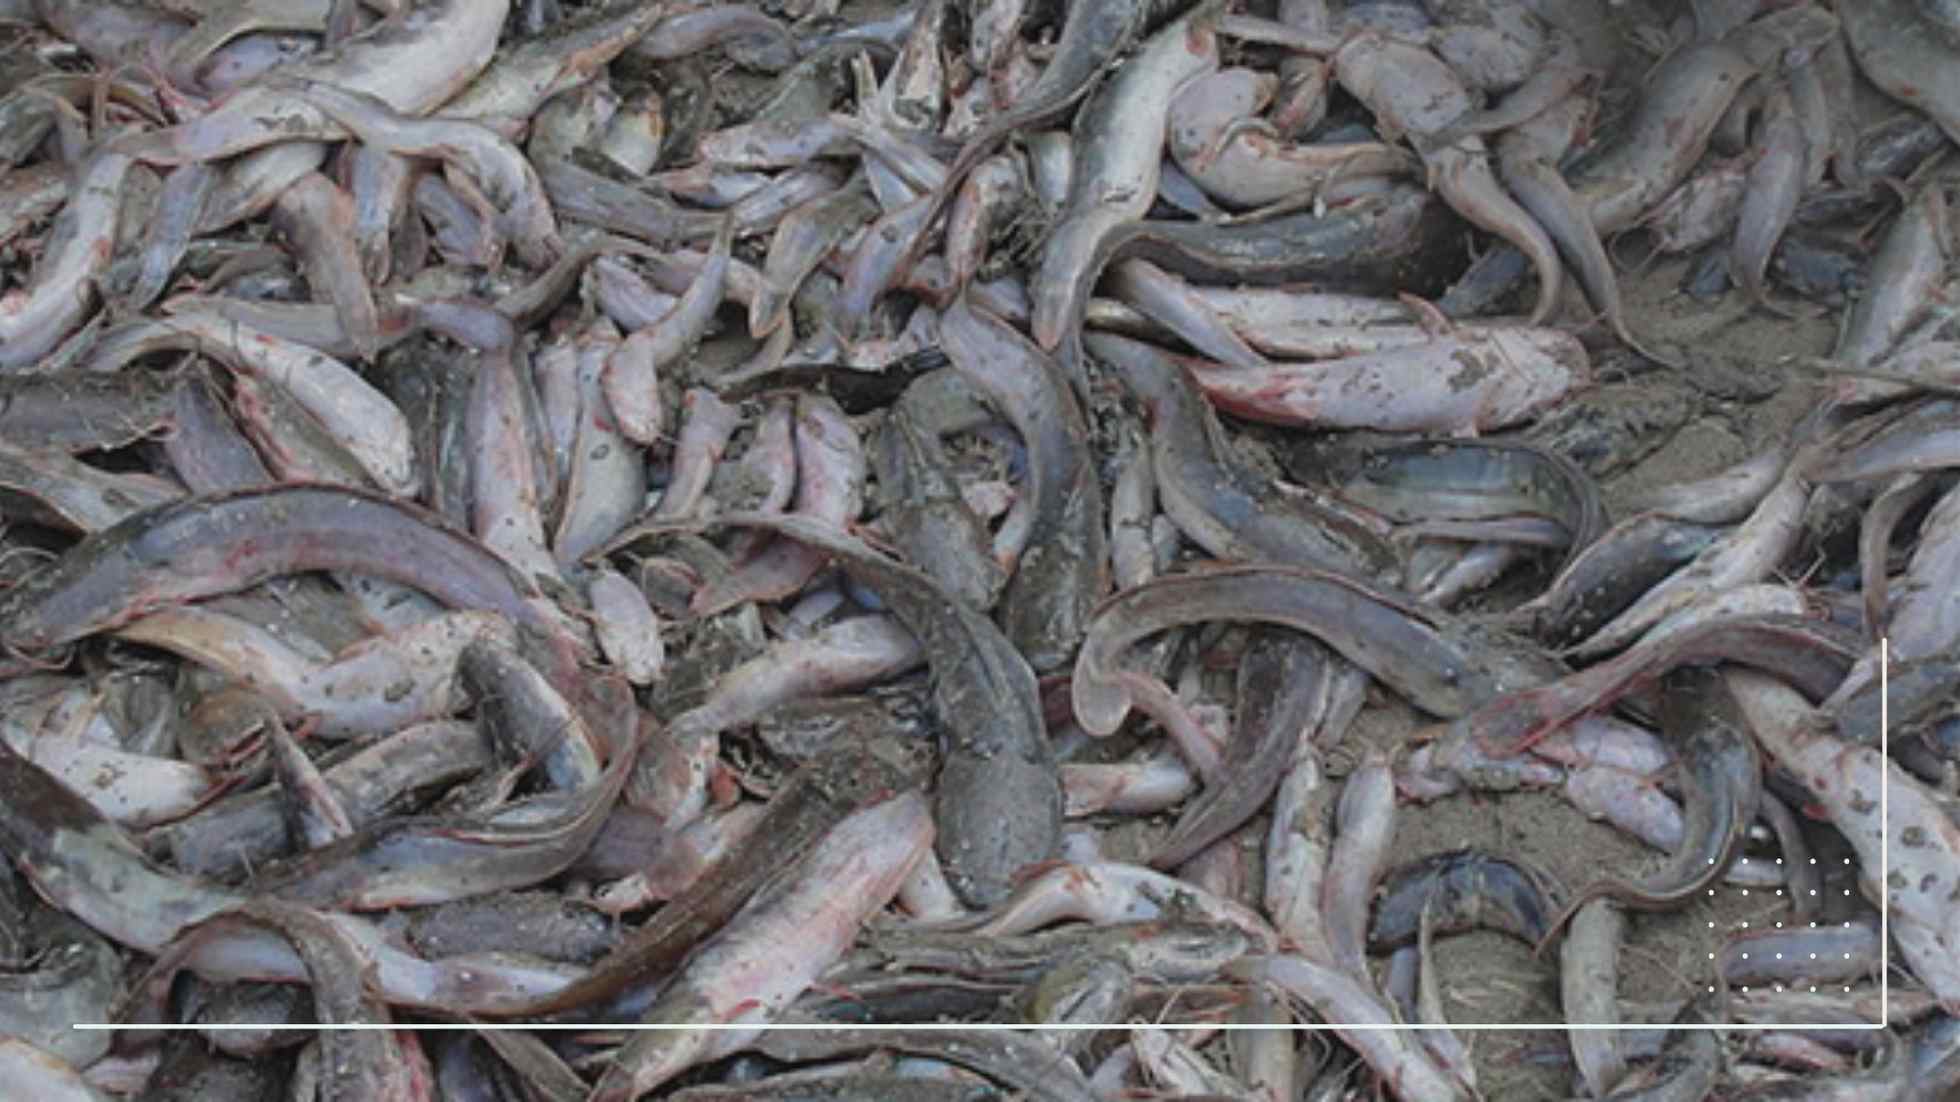 How to start catfish farm in Nigeria